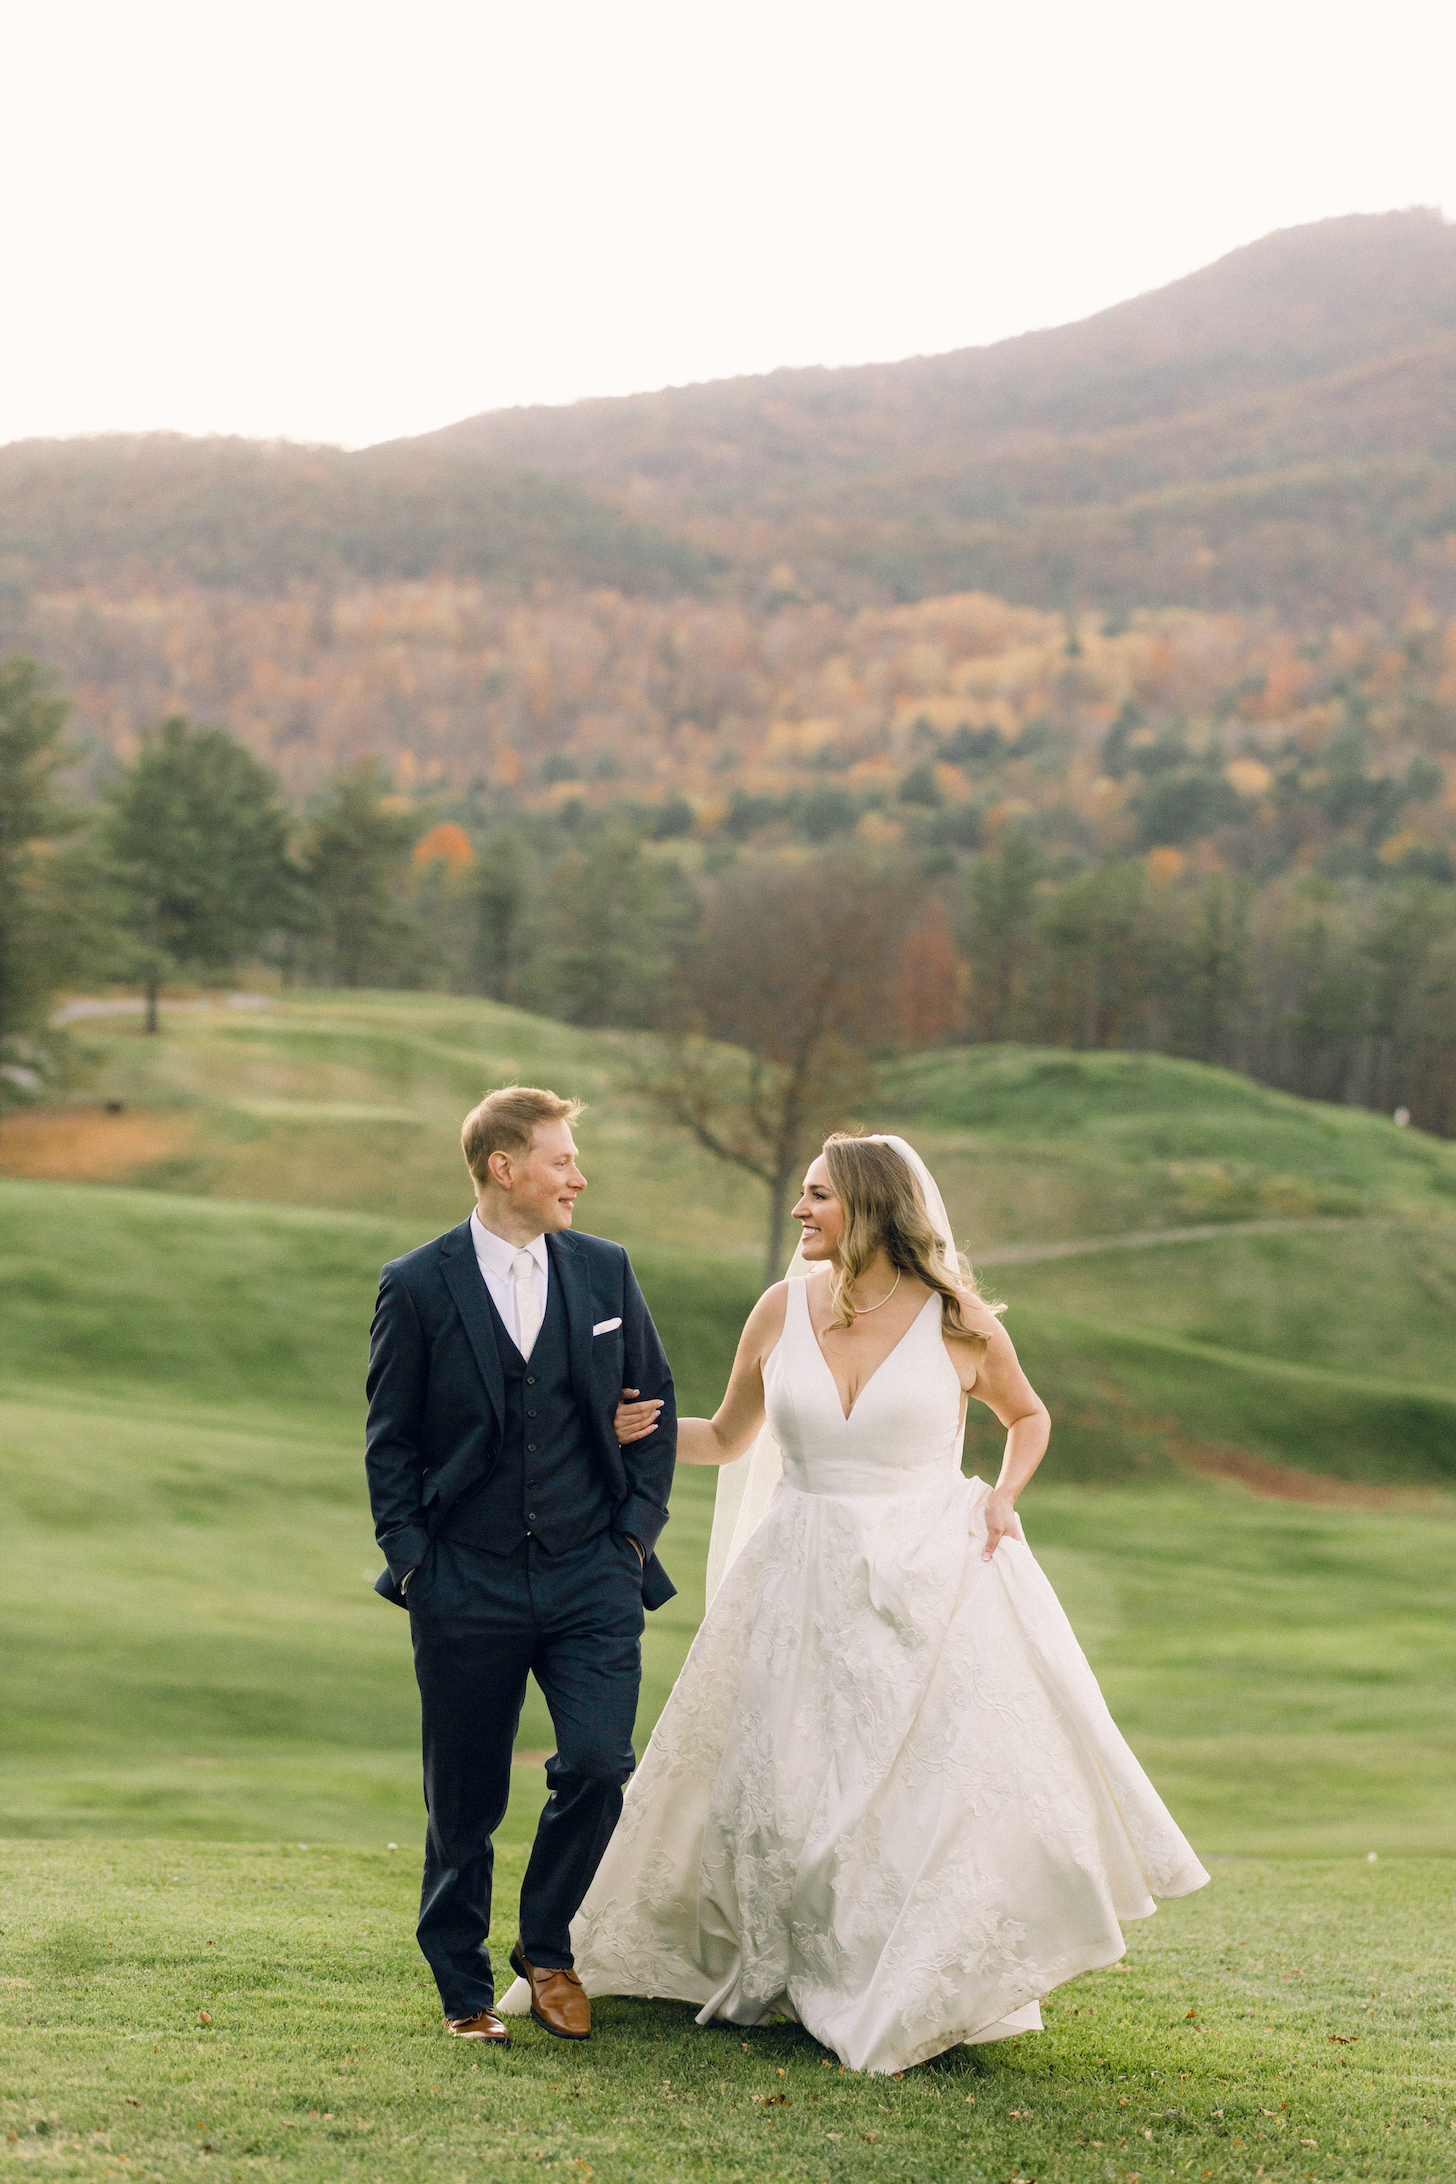 Upstate New York wedding at Ticonderoga Golf Course